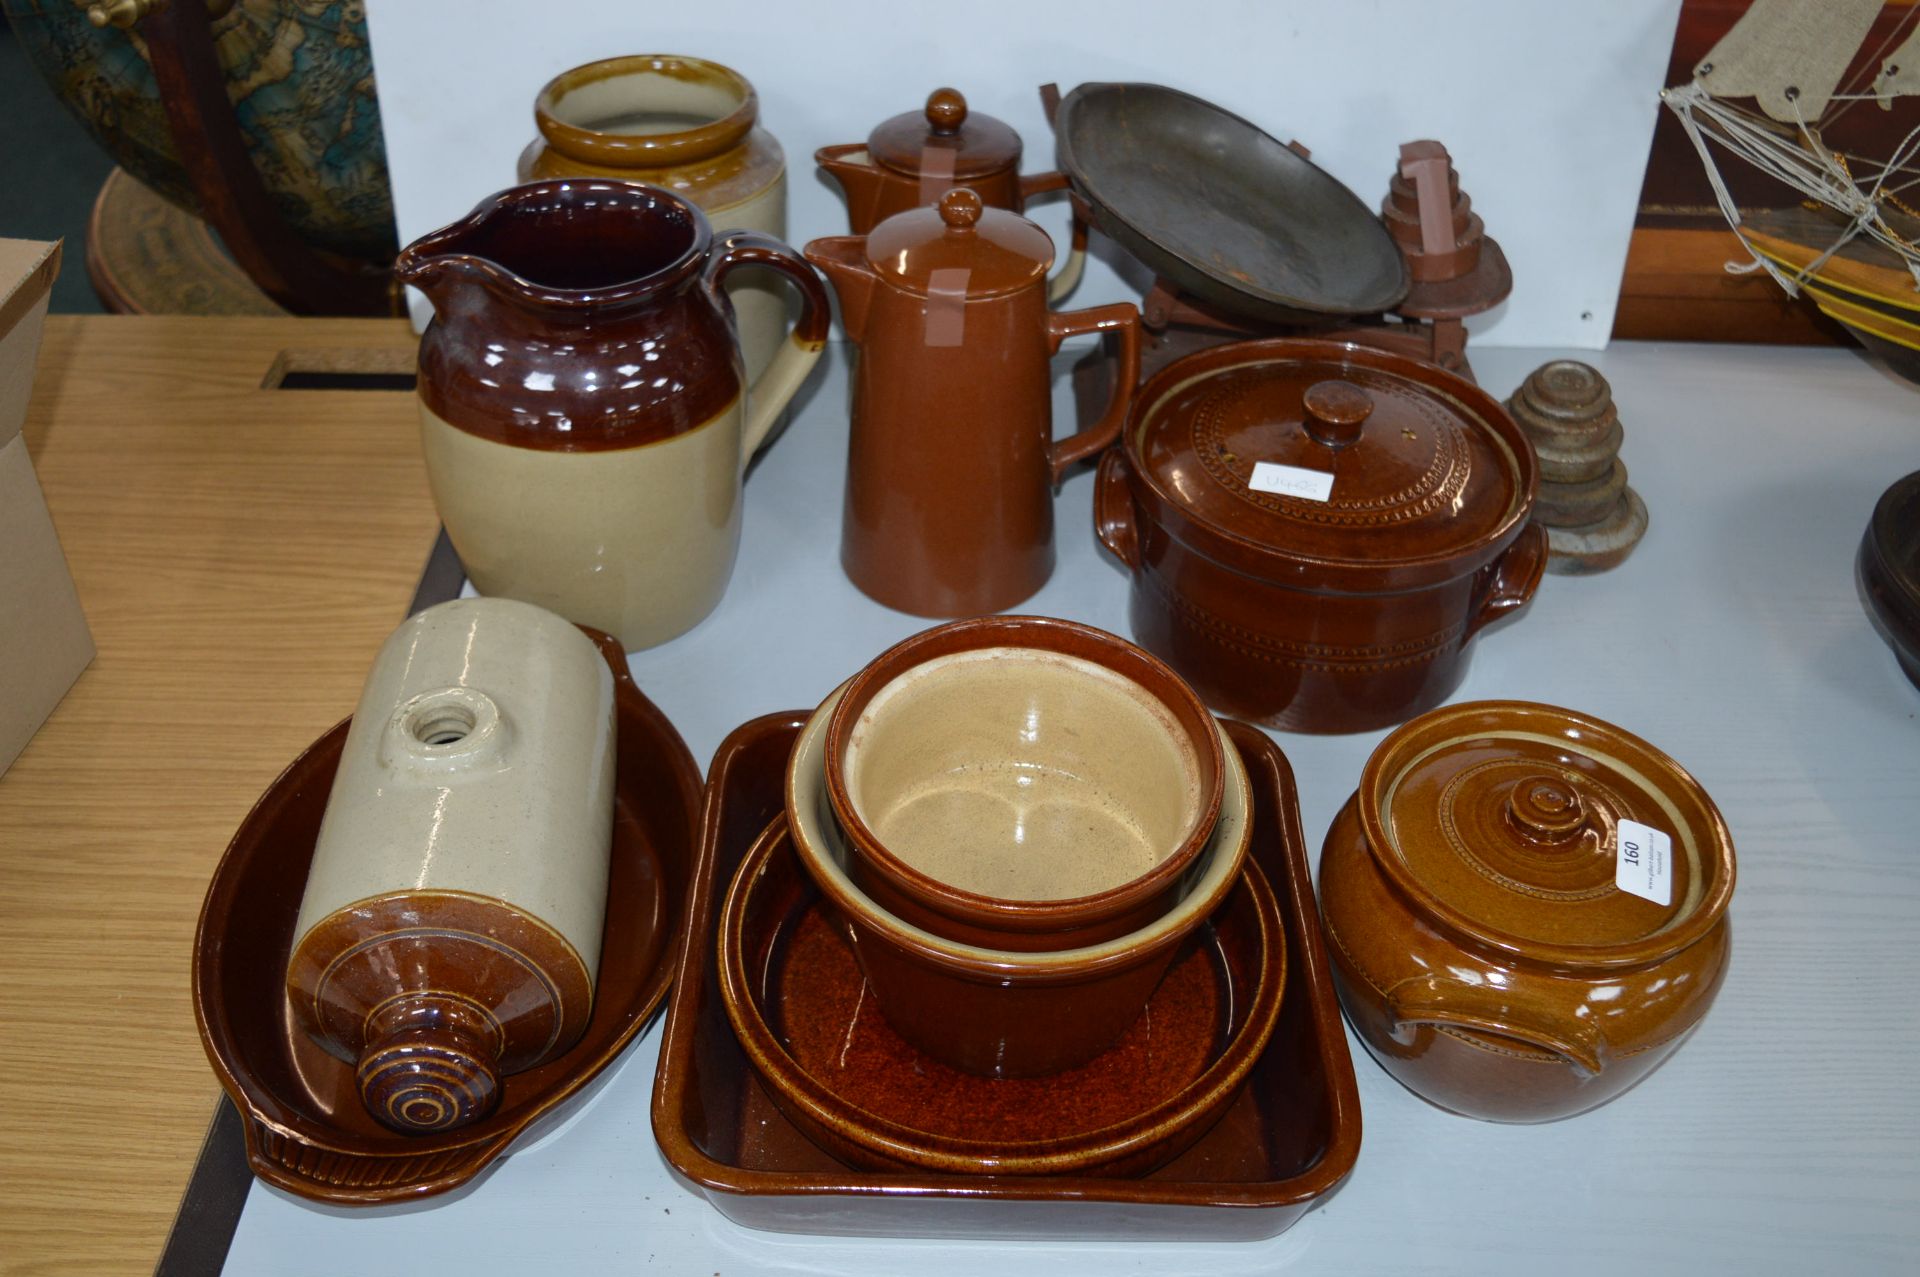 Vintage Earthenware, Crockpots, Kitchen Scales, et